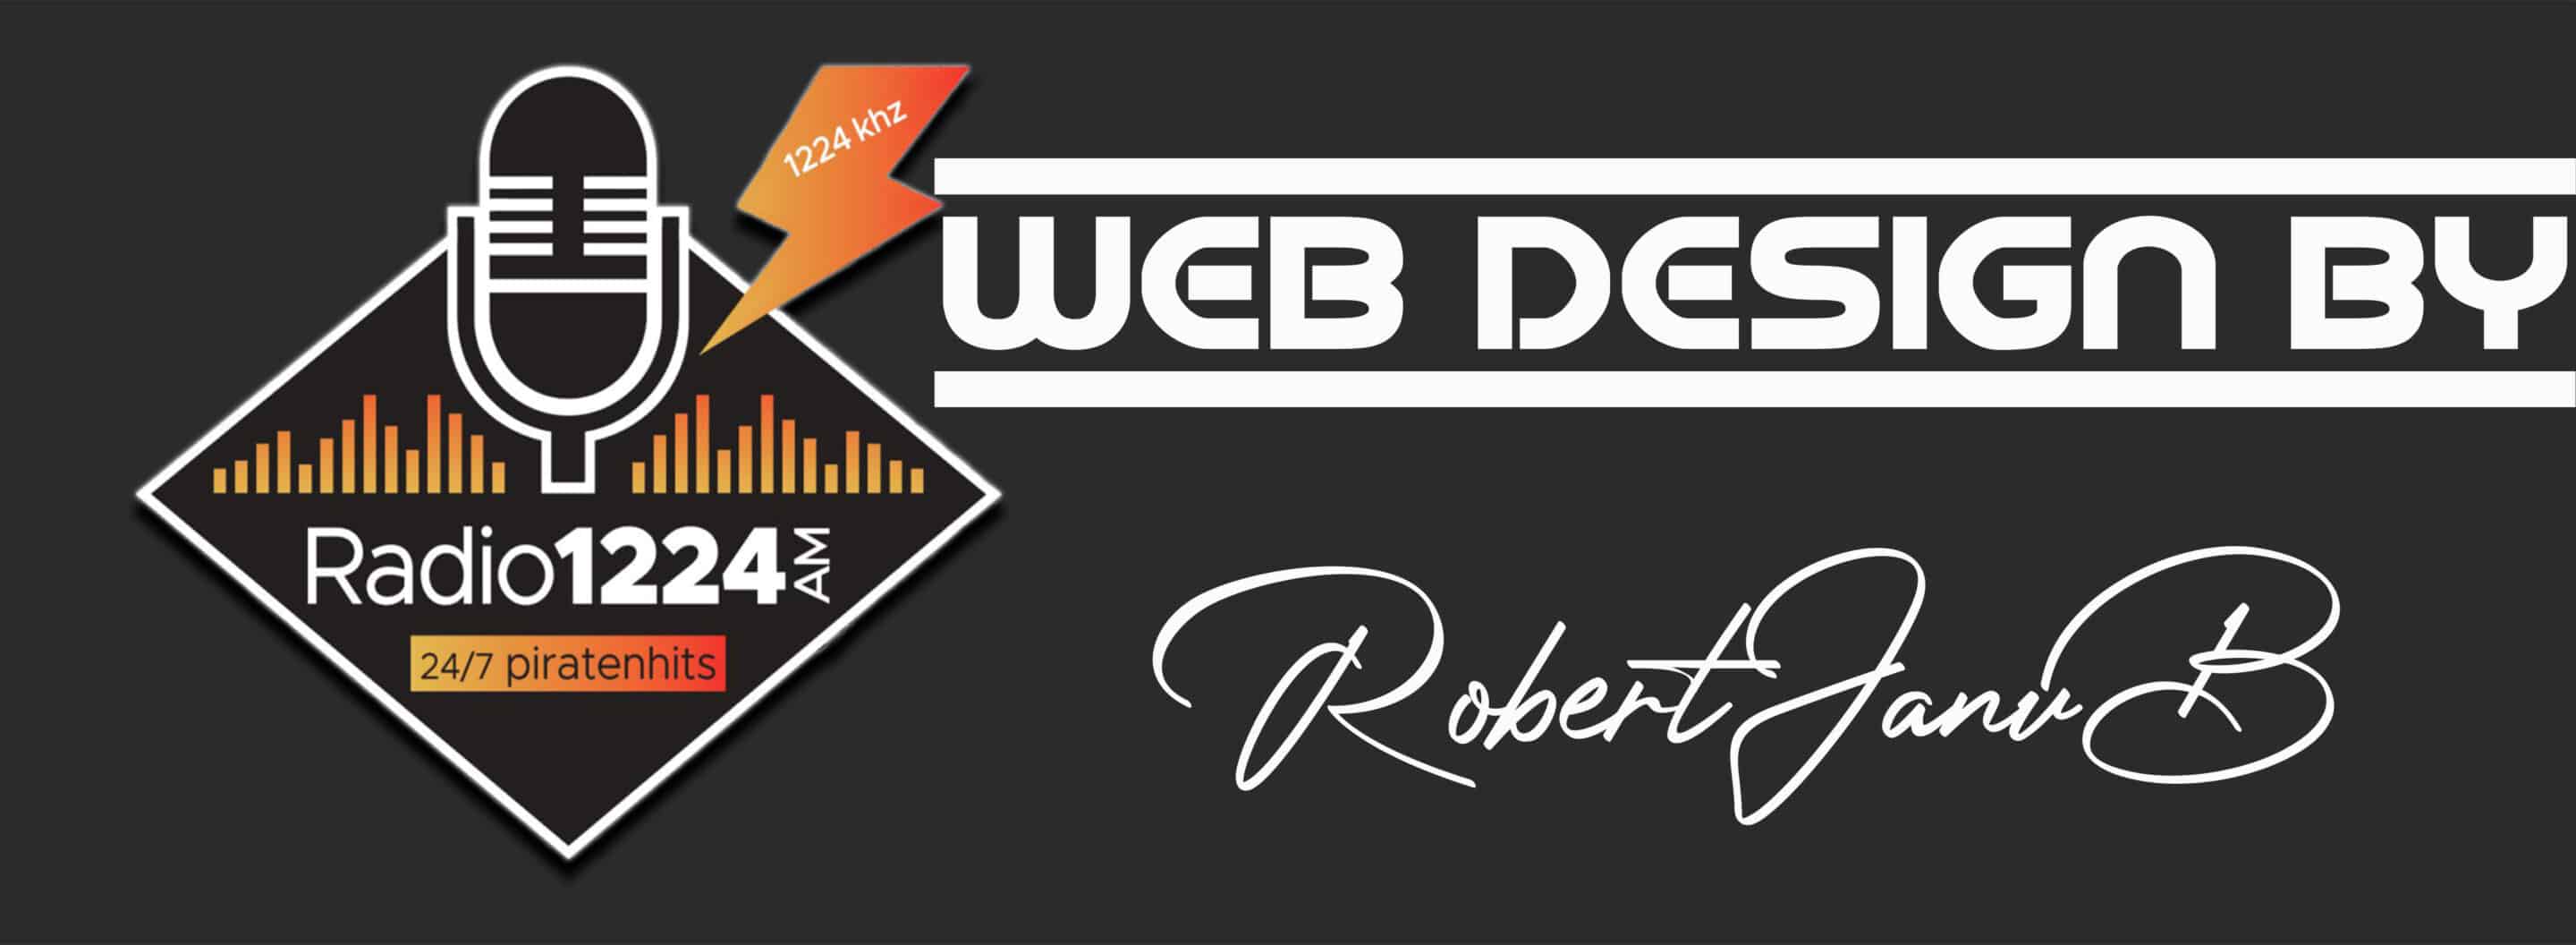 WebDesign Radio 1224